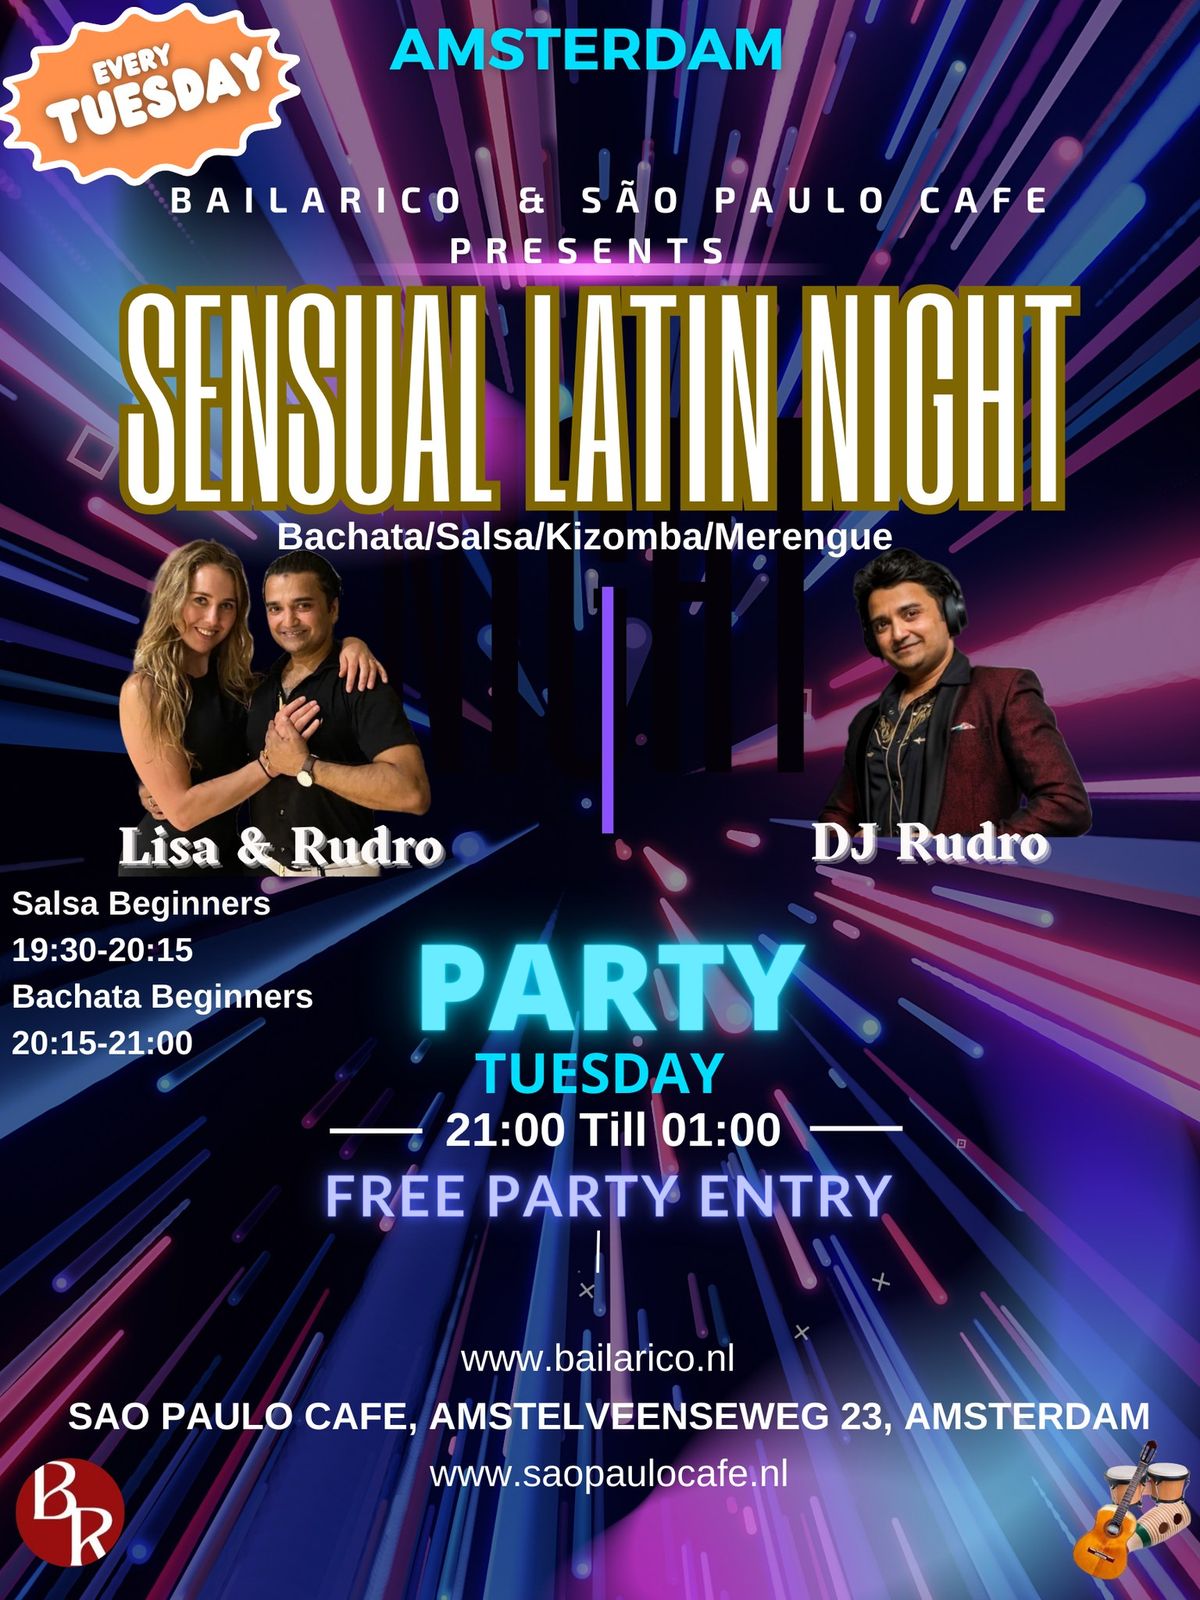 Tuesday Sensual Latin Night Amsterdam & Bachata\/Salsa Tryout by BailaRico and Sao Paulo Cafe